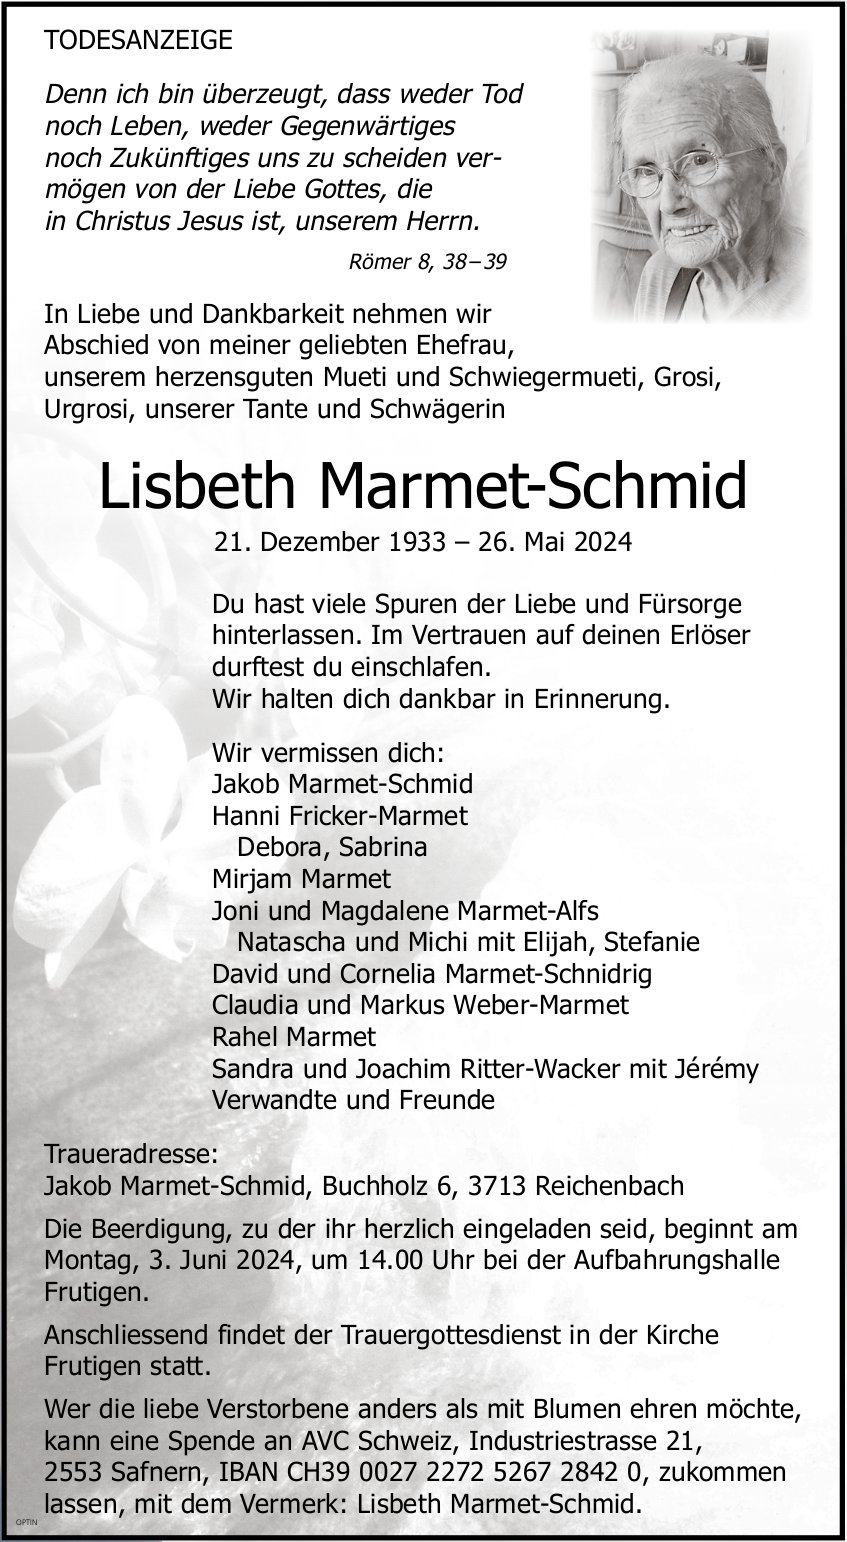 Lisbeth Marmet-Schmid, Mai 2024 / TA